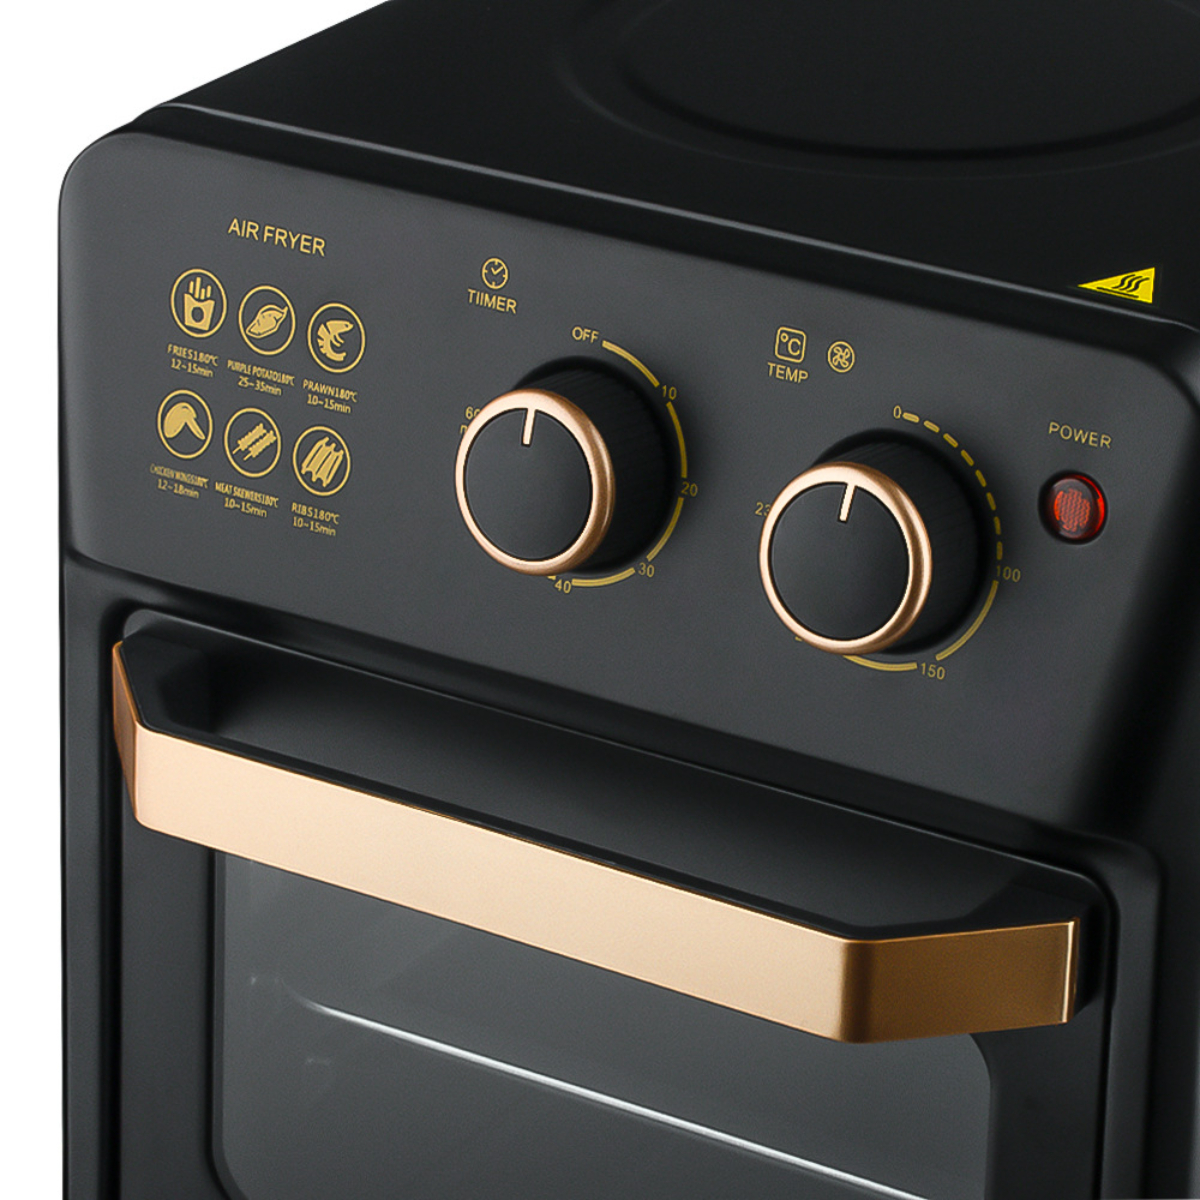 BYTELIKE Oven Elektro-Backofen schwarz Fryer Heißluftfritteuse Multifunktional Fryer 14L Air Smart Home Watt Automatisch 1250